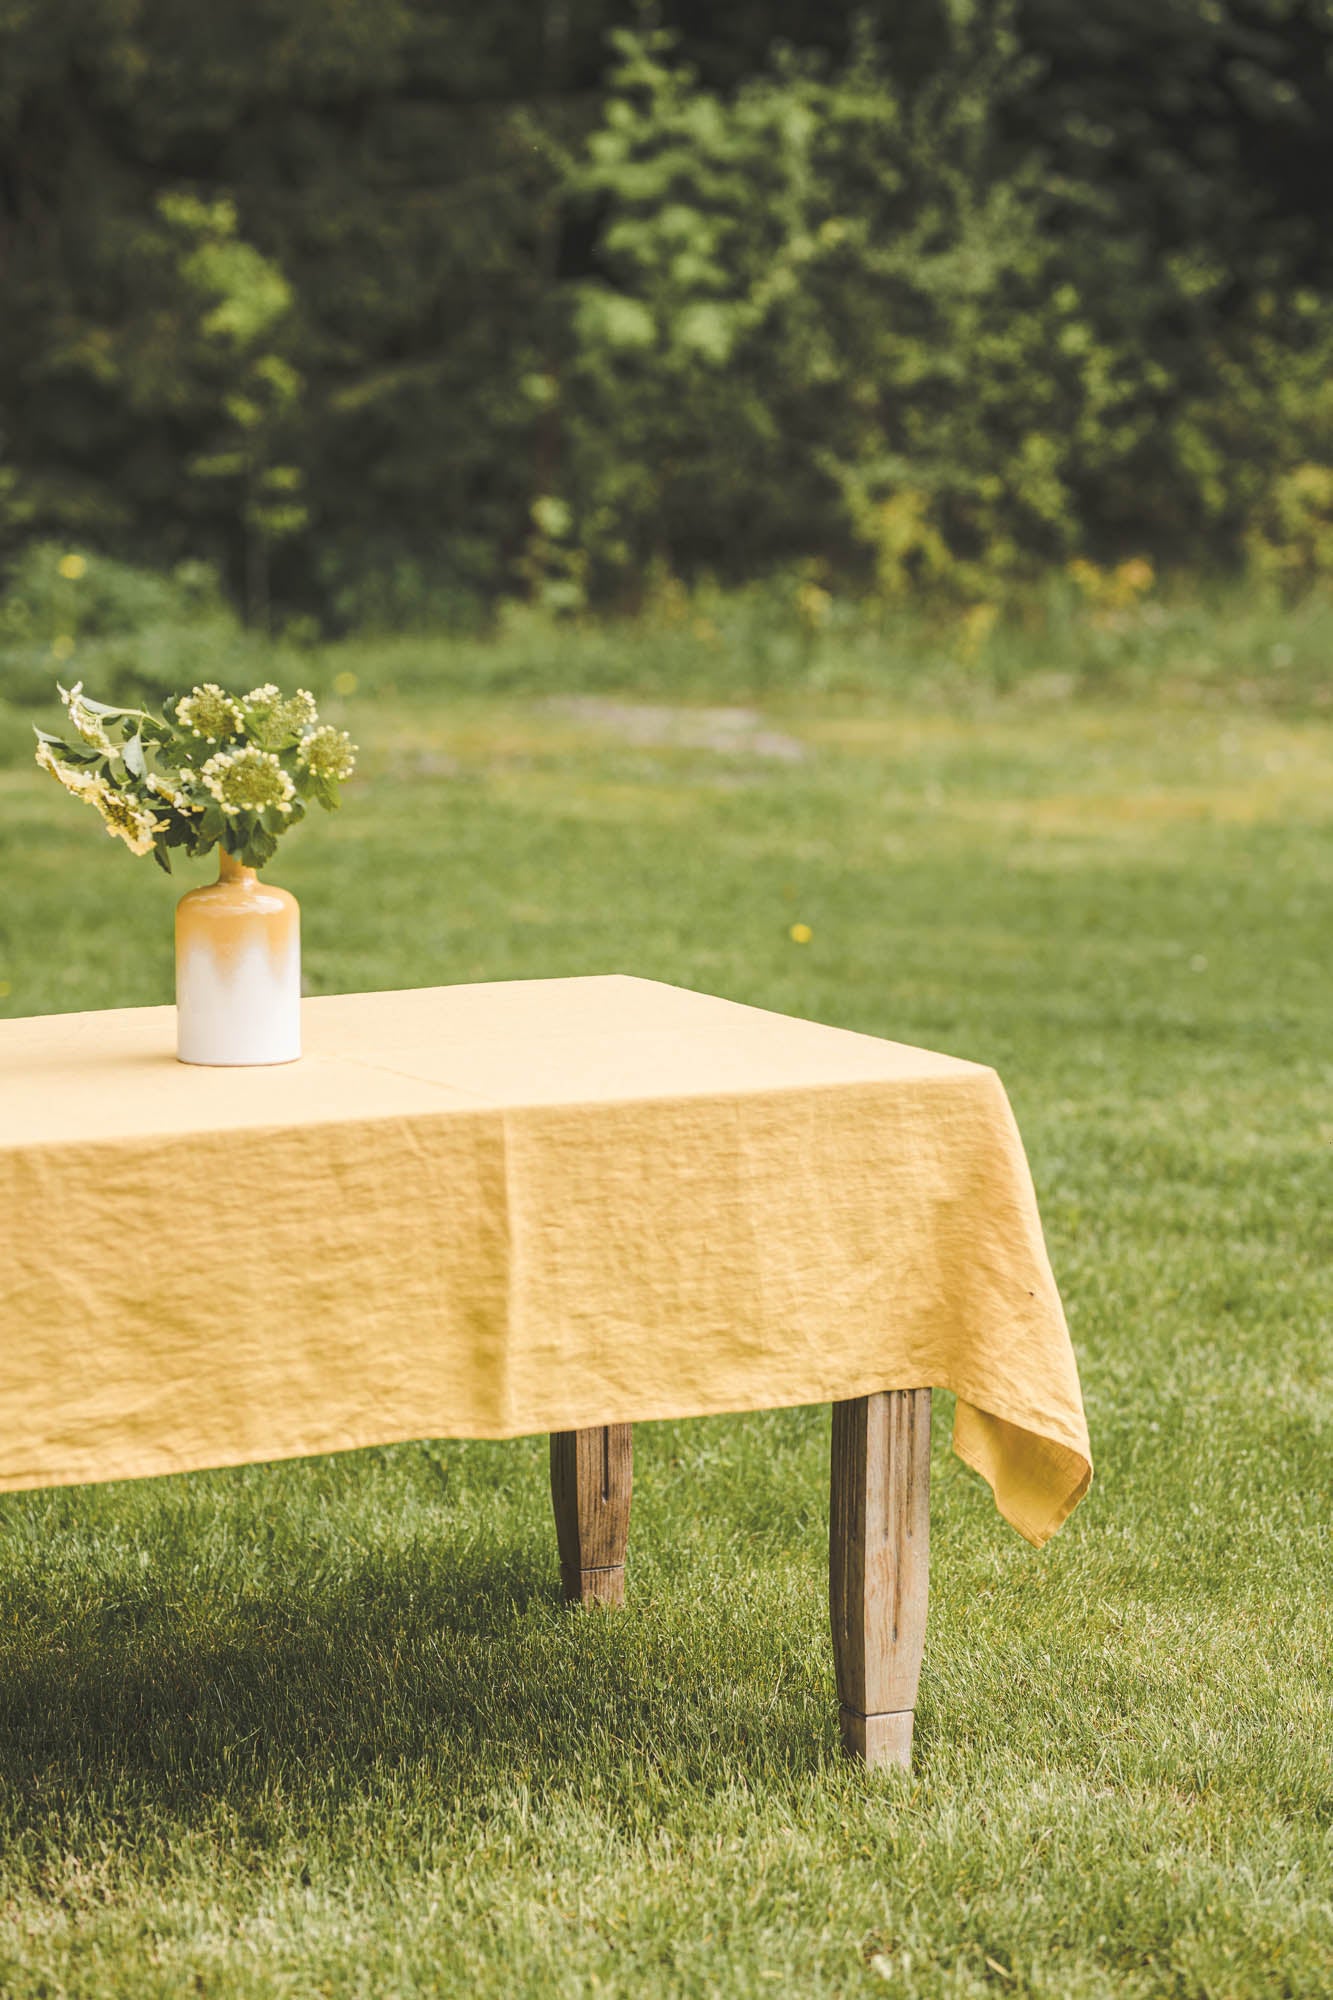 Mimosa yellow linen tablecloth